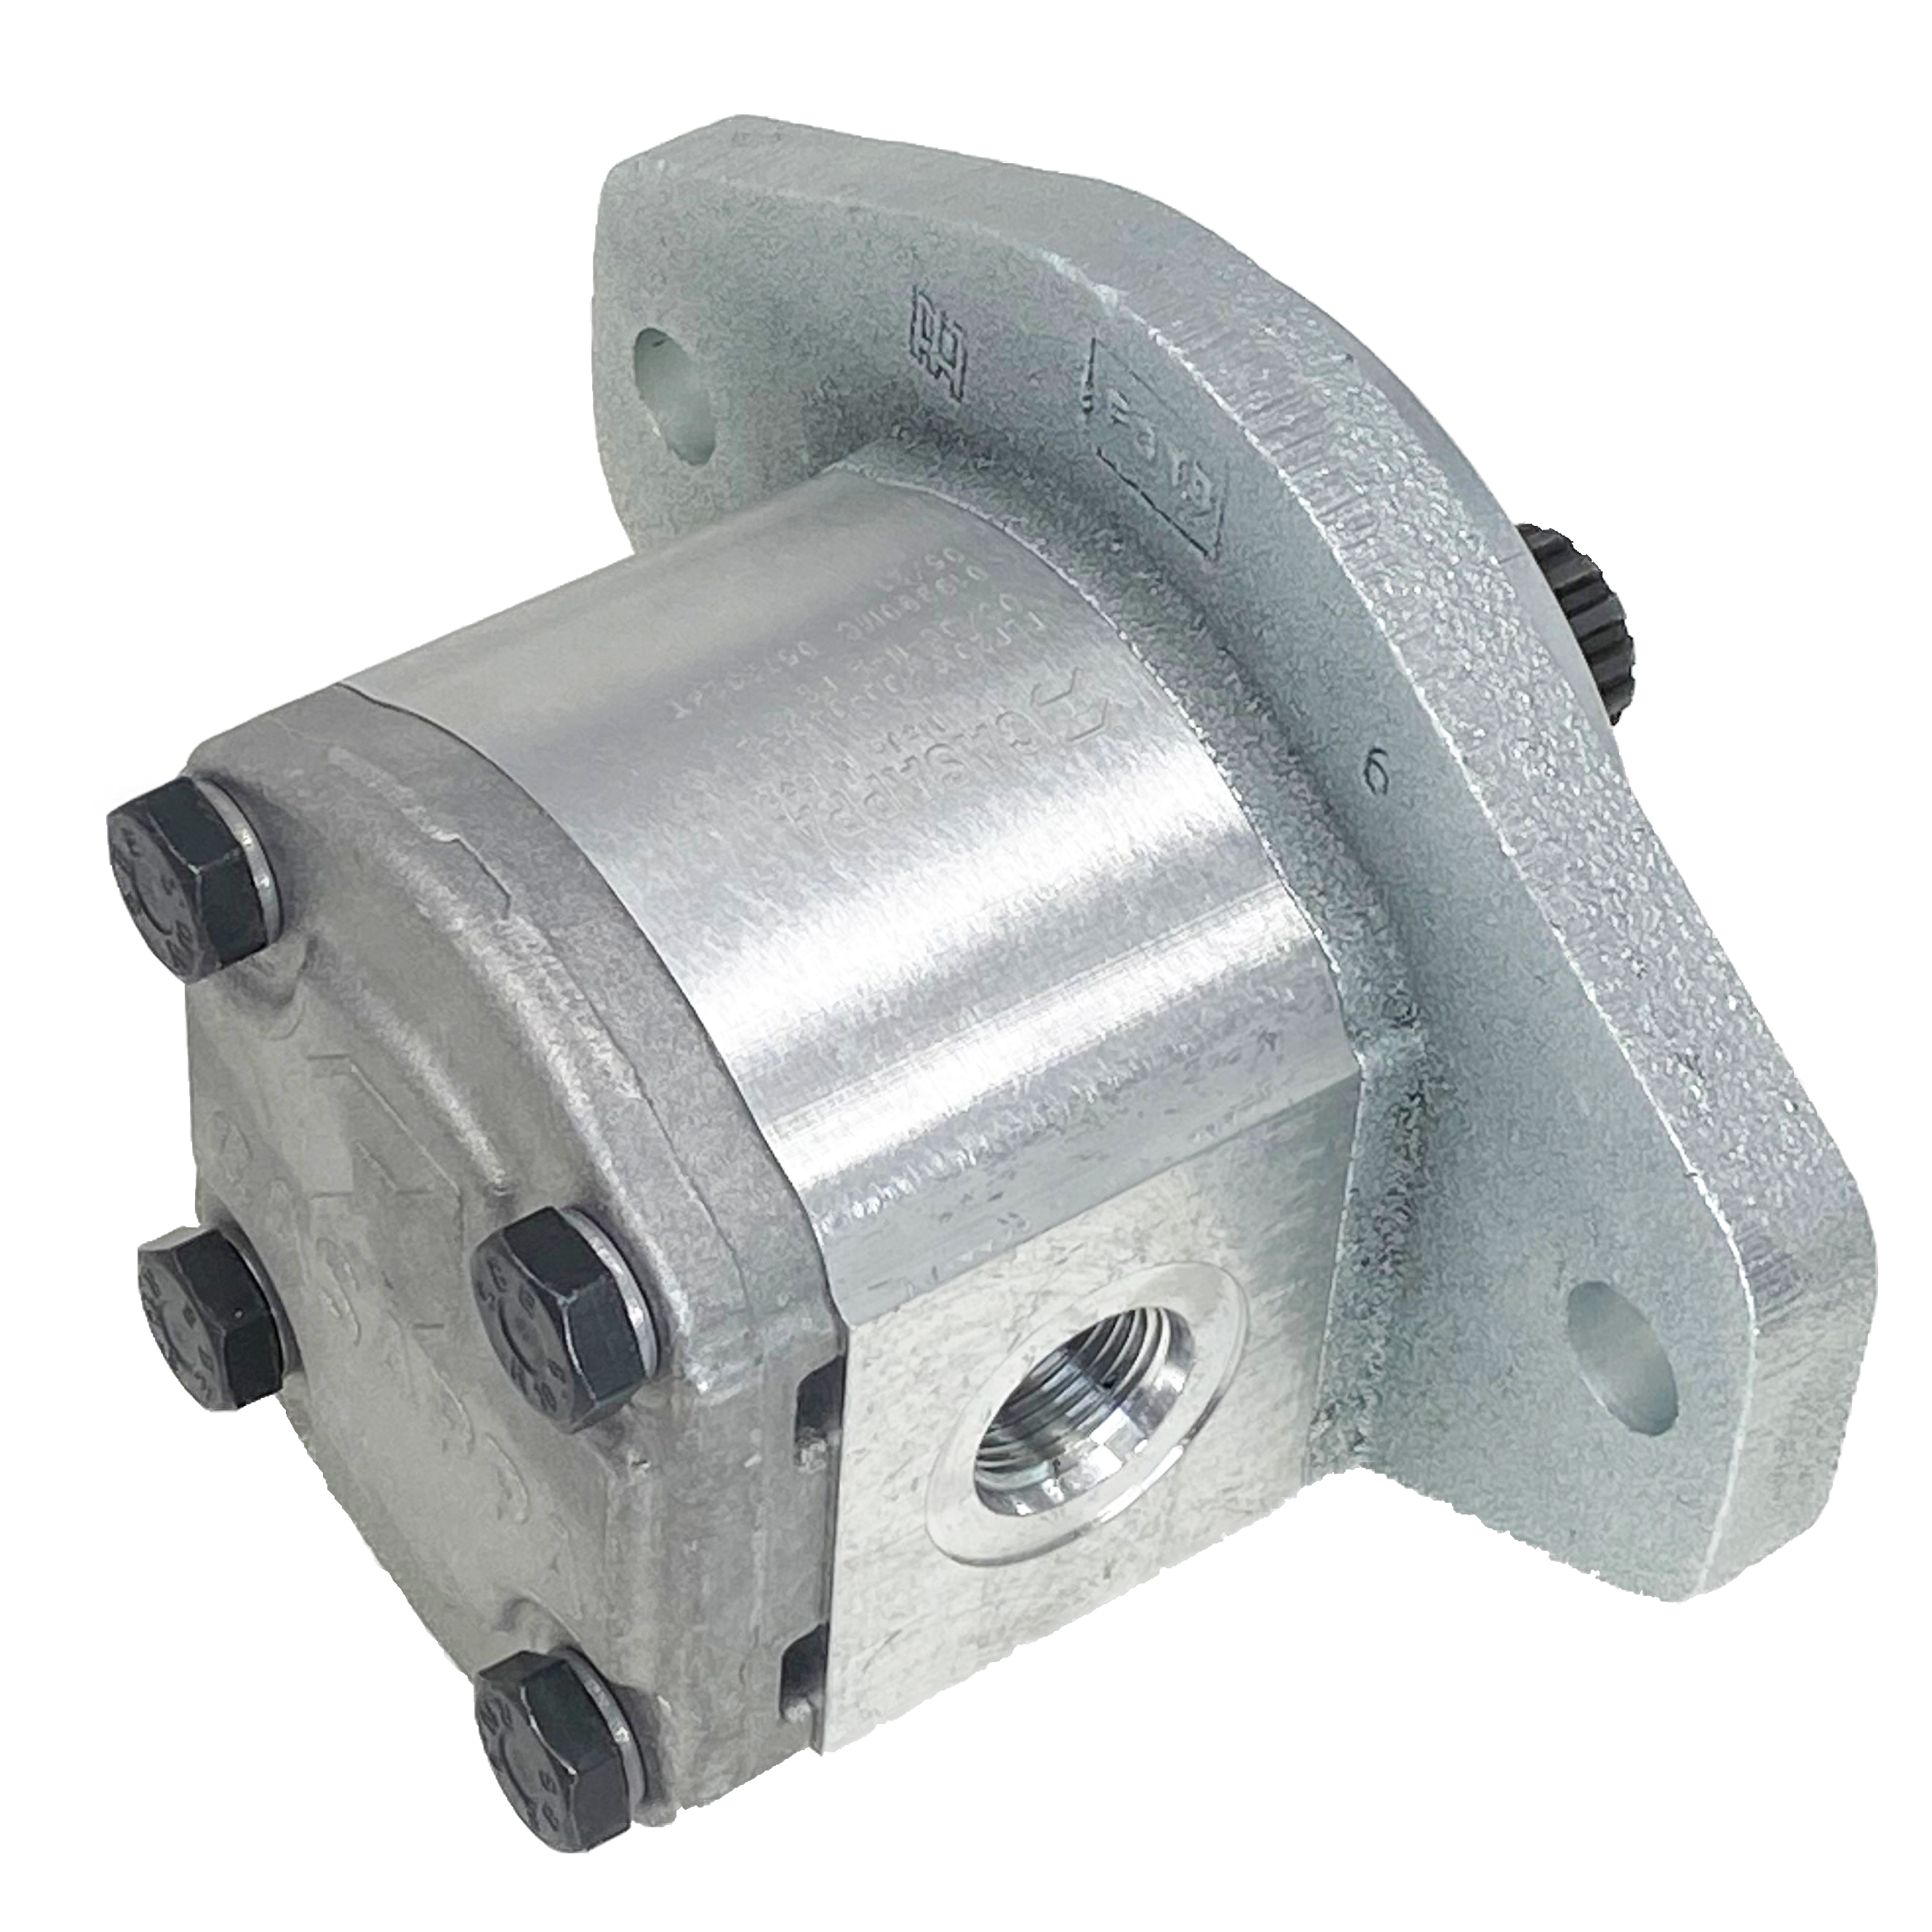 PLM20.11,2B0-04S5-LOC/OC-N-L : Casappa Polaris Gear Motor, 11.23cc, 3625psi Rated, 3500RPM, Reversible Interior Drain, 13T 16/32dp Shaft, SAE B 2-Bolt Flange, 0.625 (5/8") #10 SAE Inlet, 0.625 (5/8") #10 SAE Outlet, Aluminum Body, Cast Iron Flange